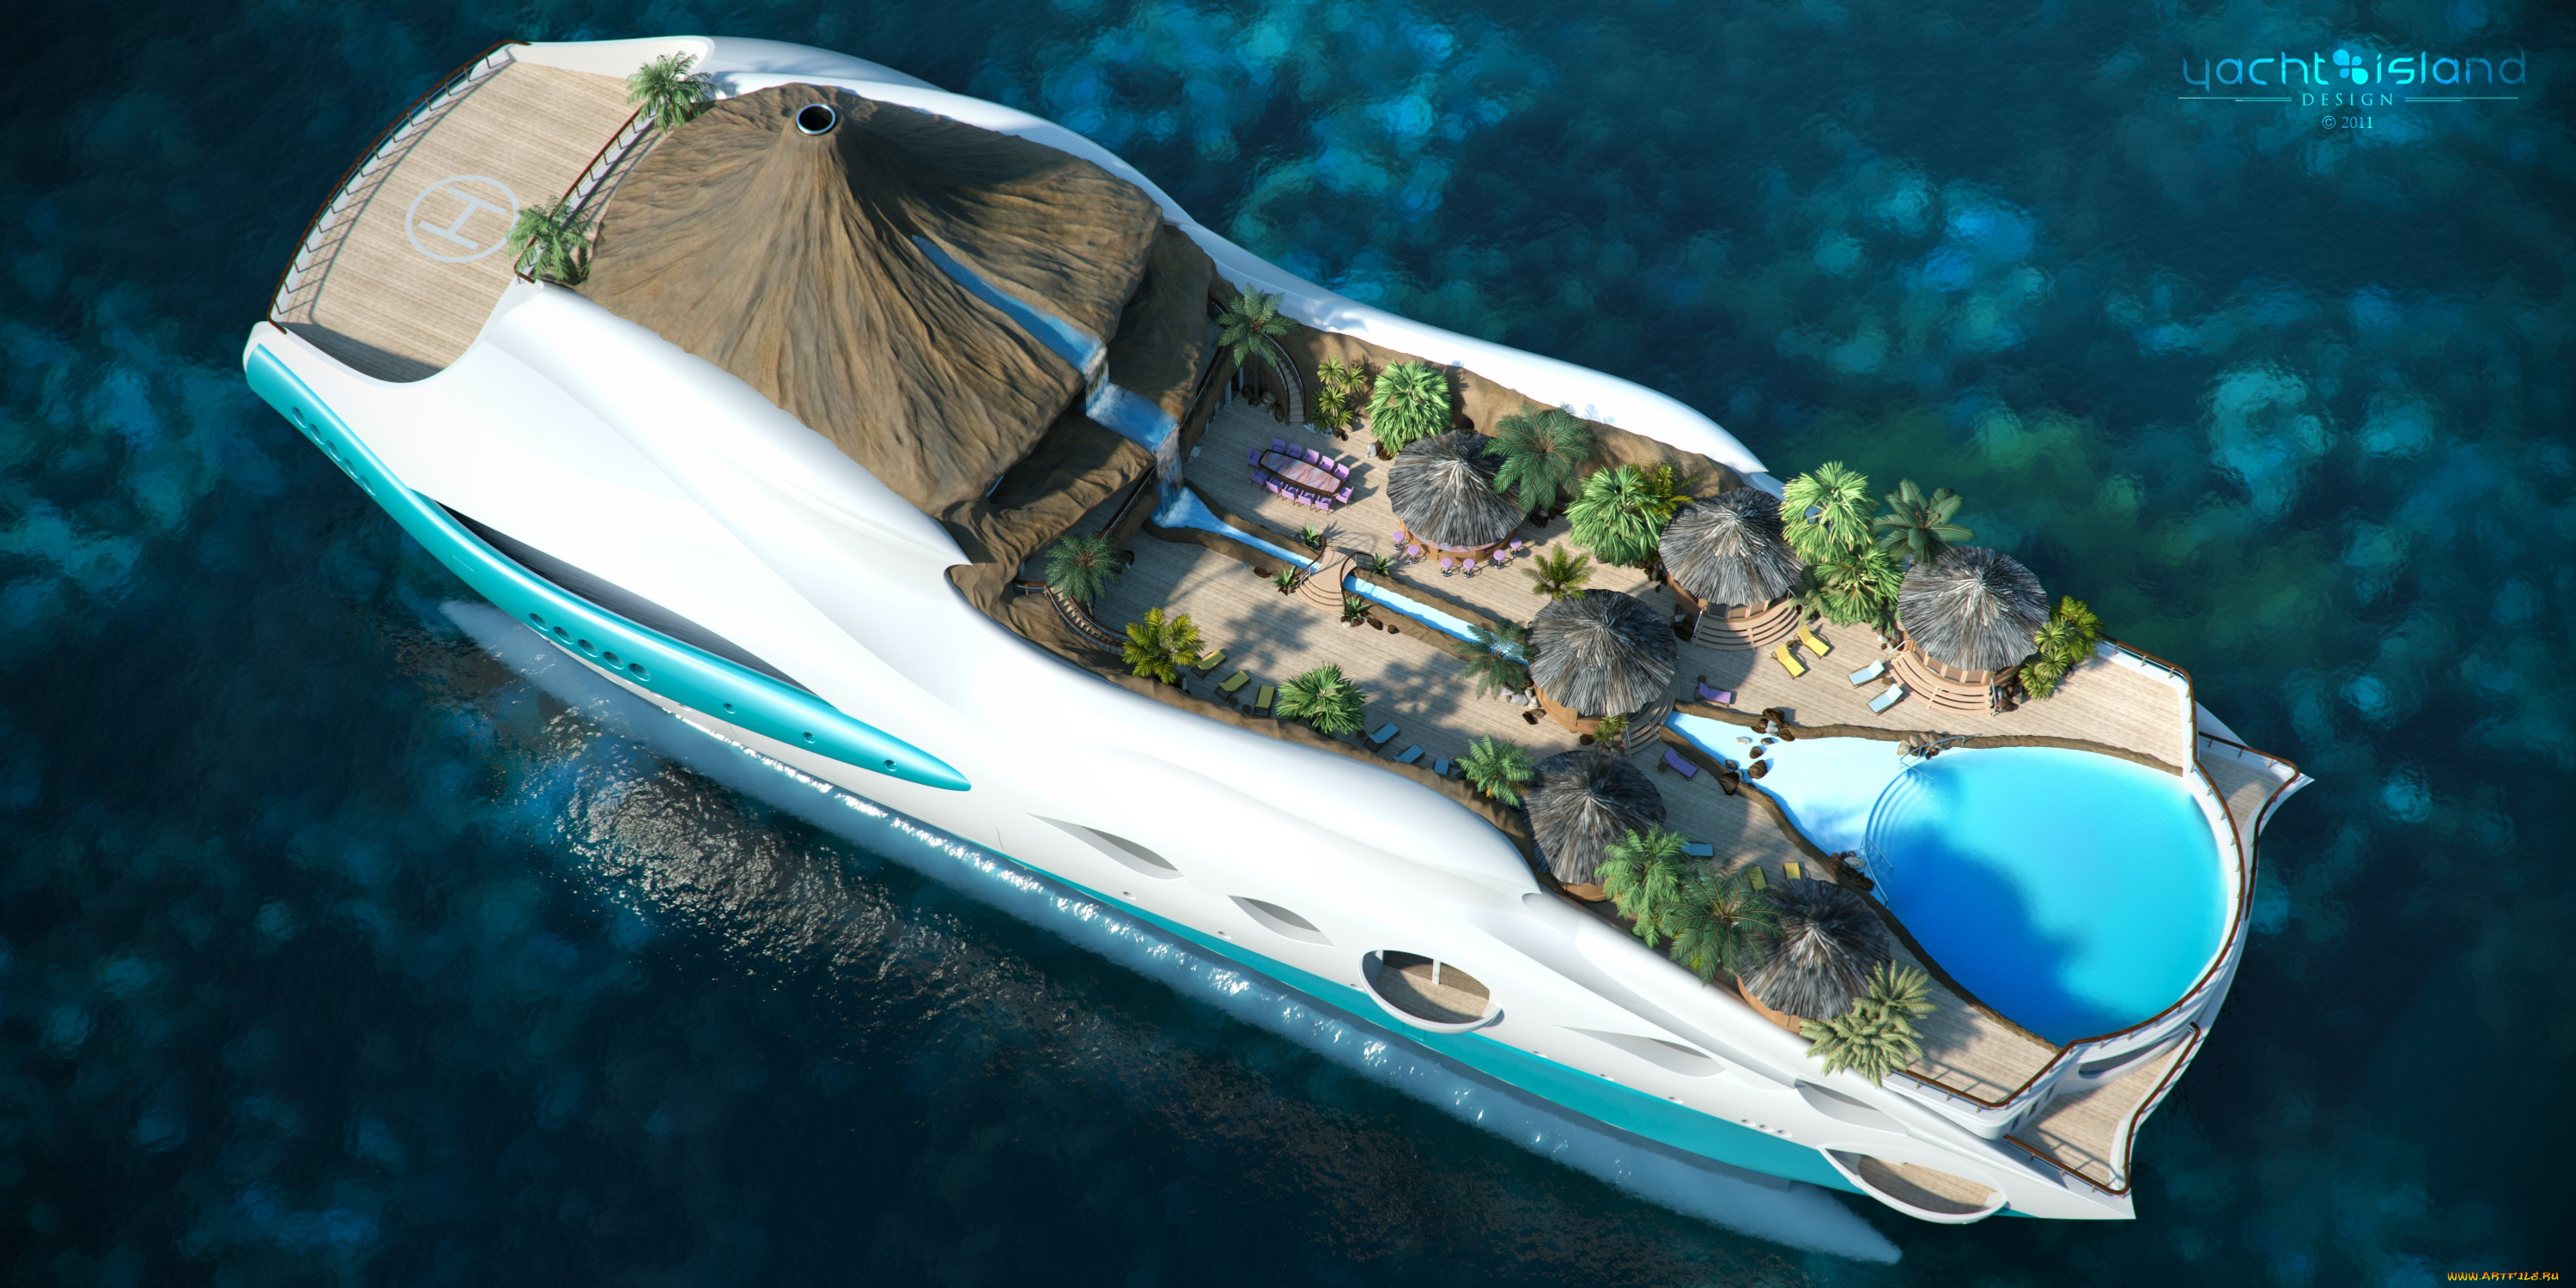 корабли, 3d, futuristic, yacht-island, проект, superyacht, gesign, яхта-остров, tip, 2